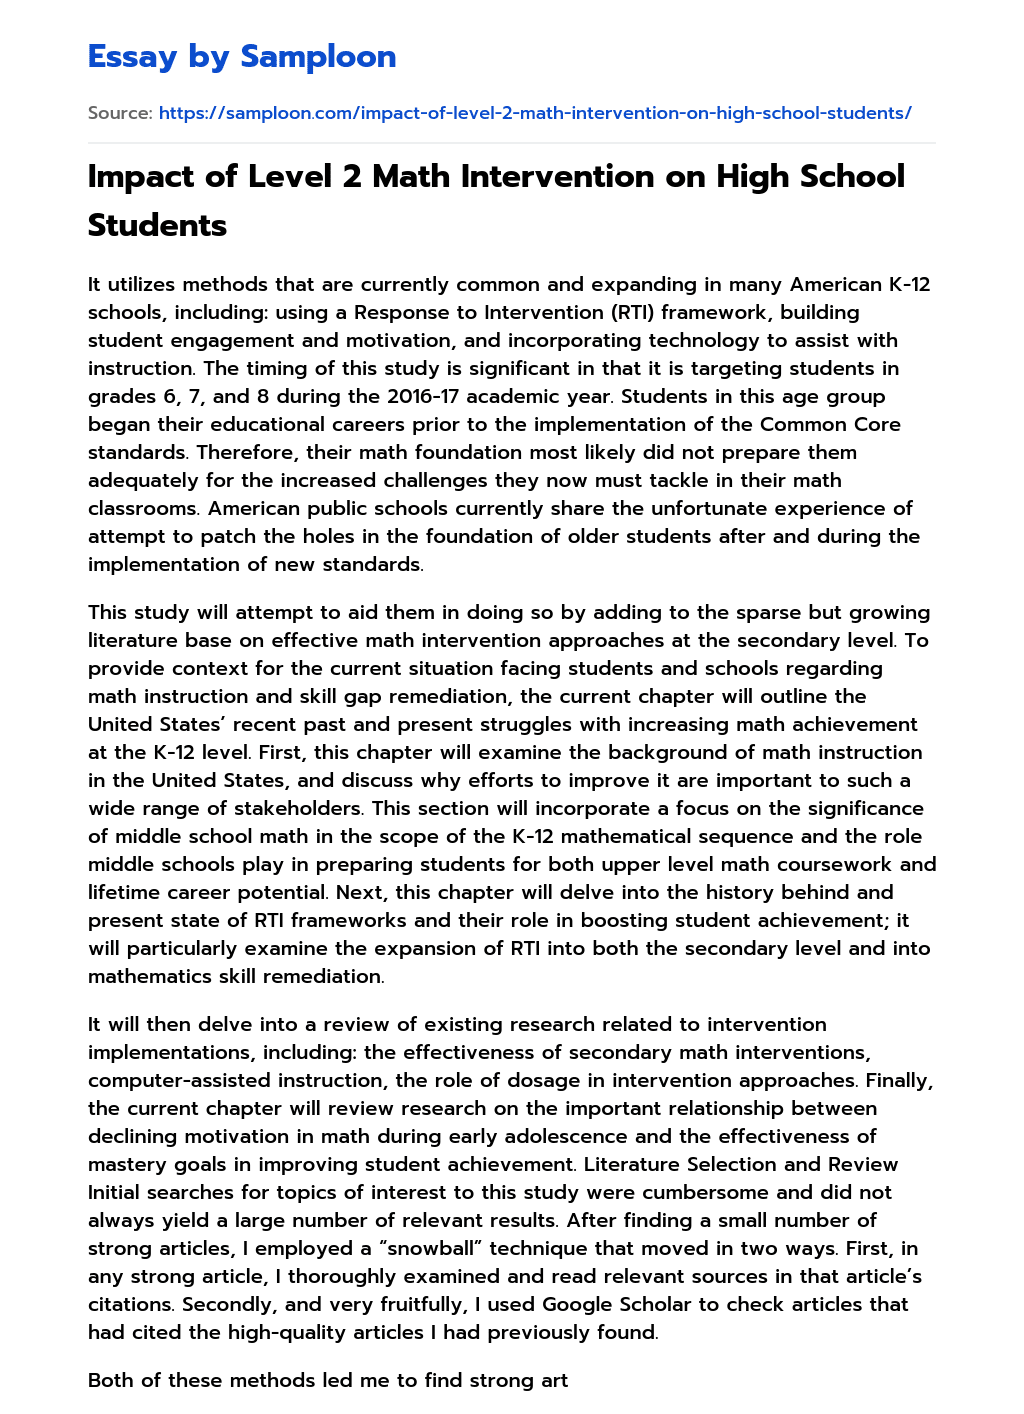 Impact of Level 2 Math Intervention on High School Students essay